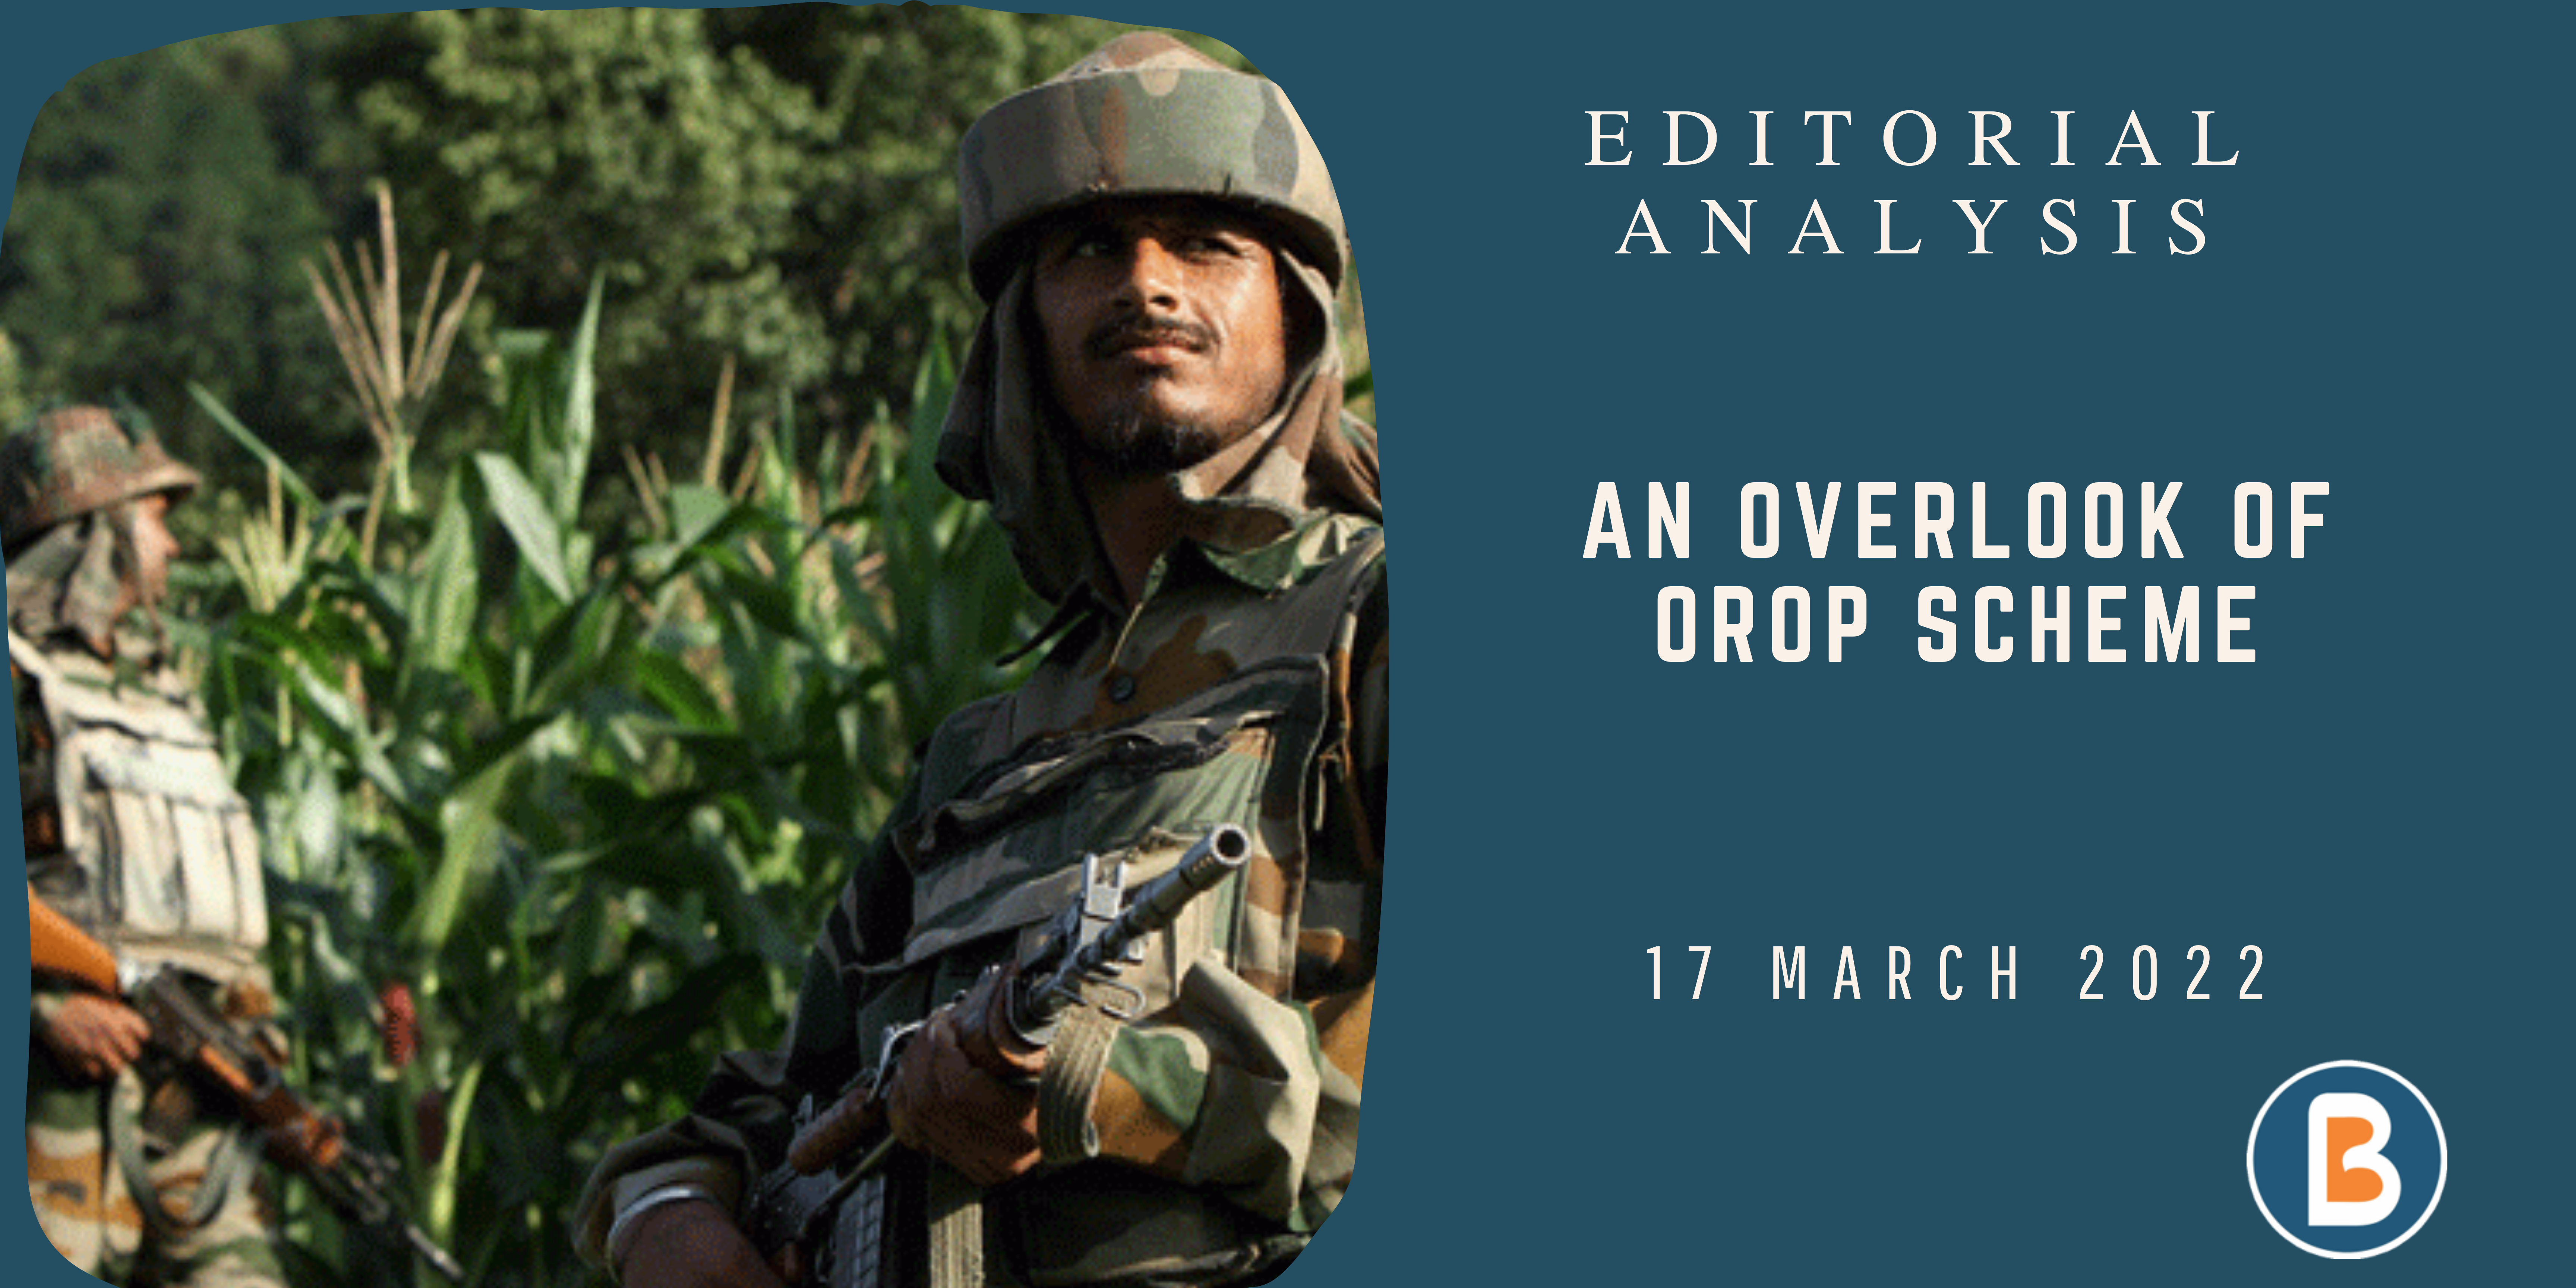 Editorial Analysis for UPSC - An Overlook of OROP Scheme